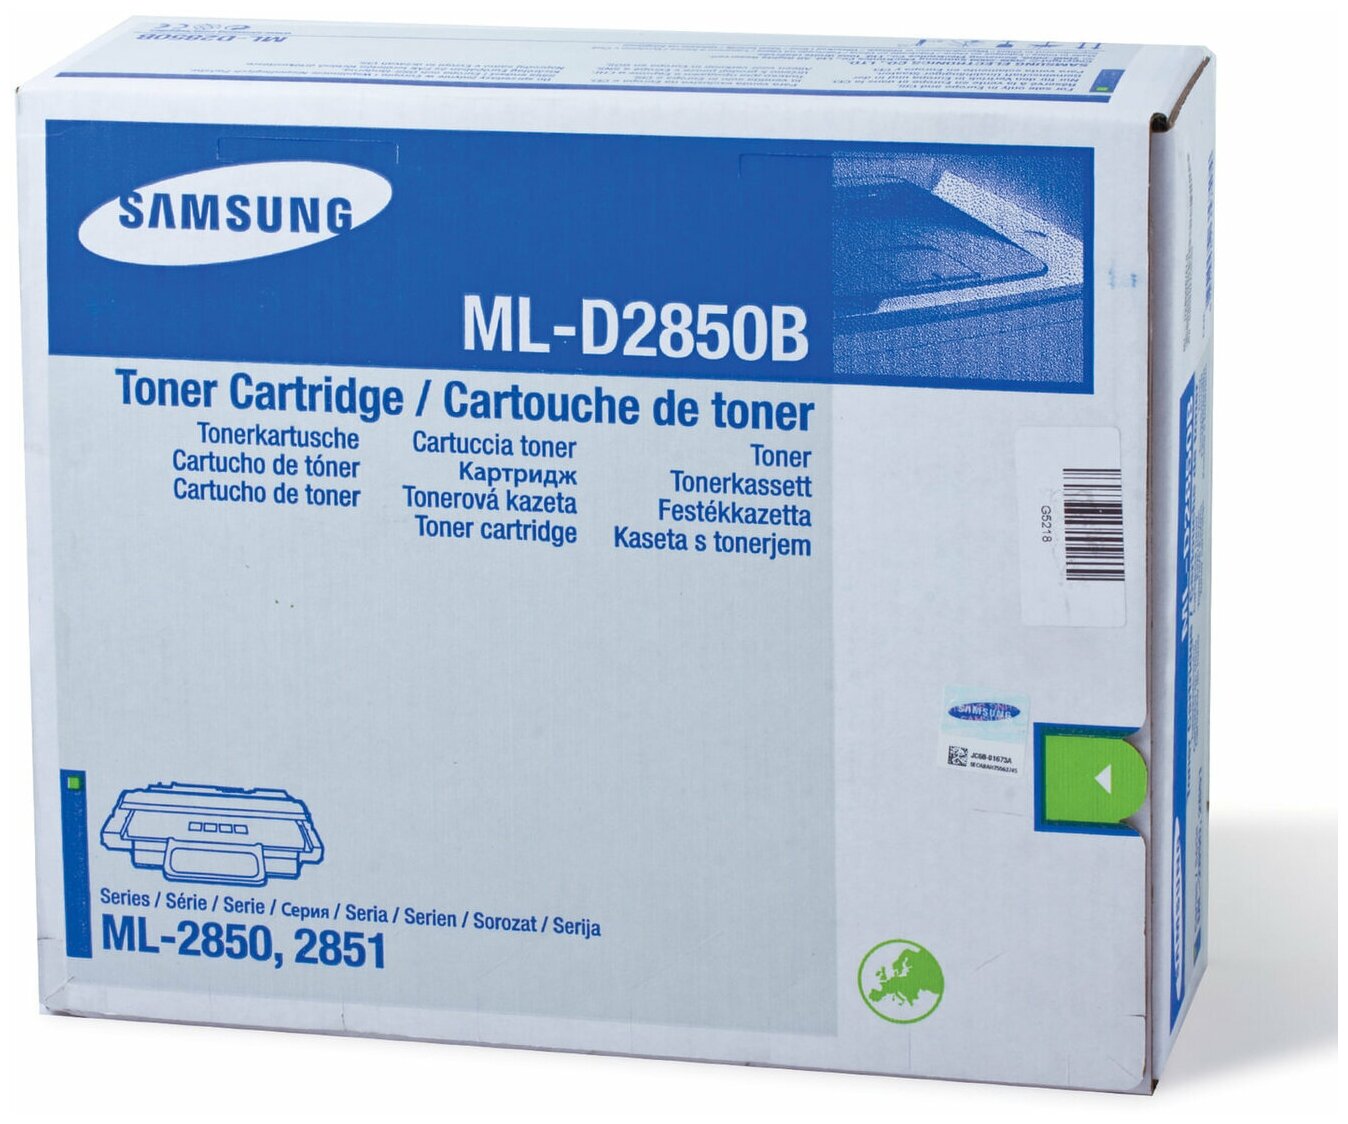 Тонер-картридж Samsung ML-D2850B, черный, оригинал